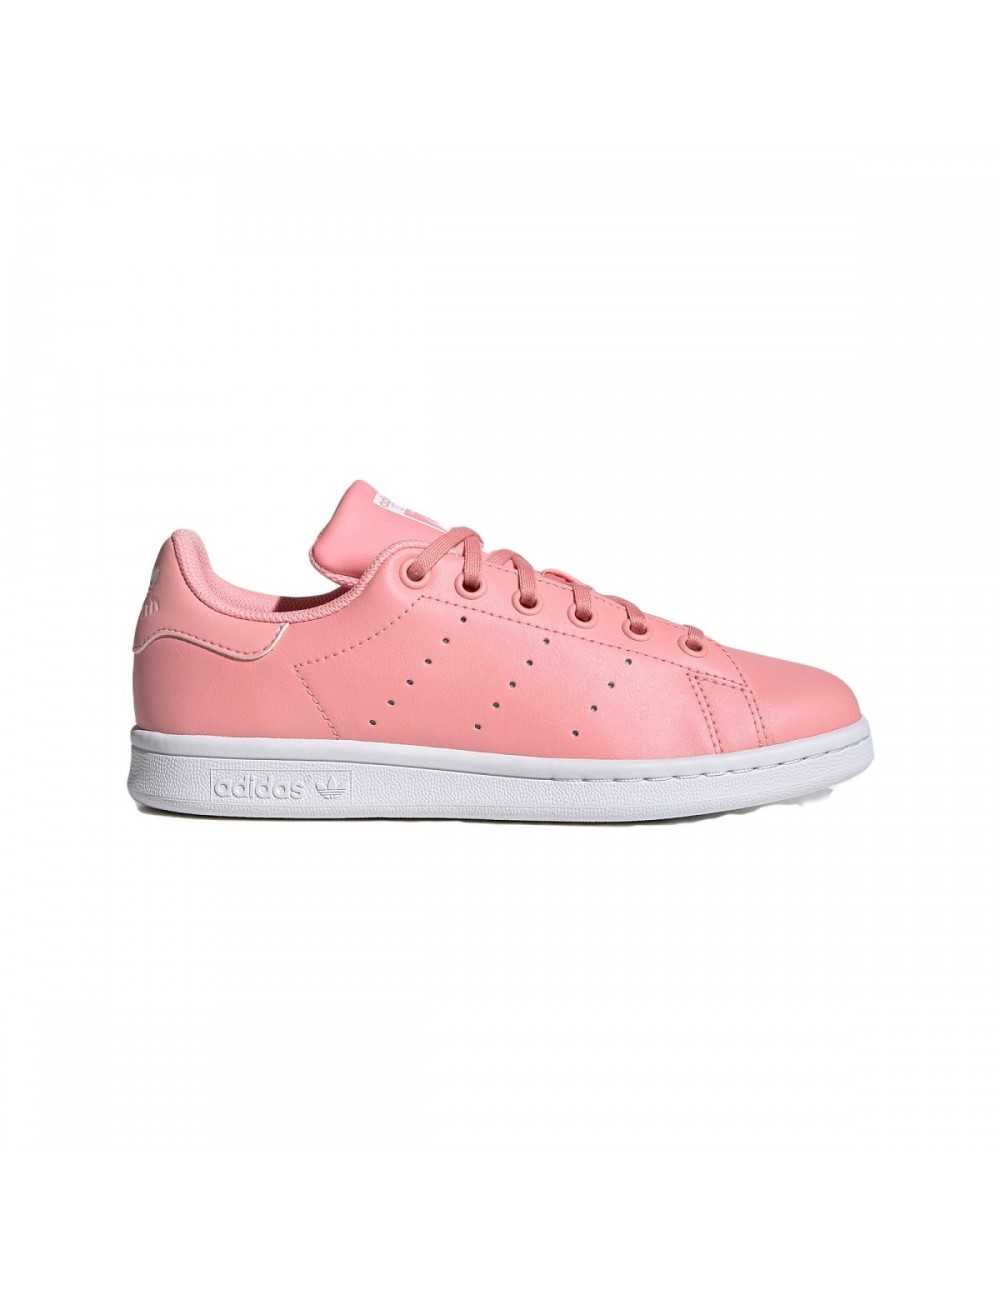 adidas donna rosa scarpe